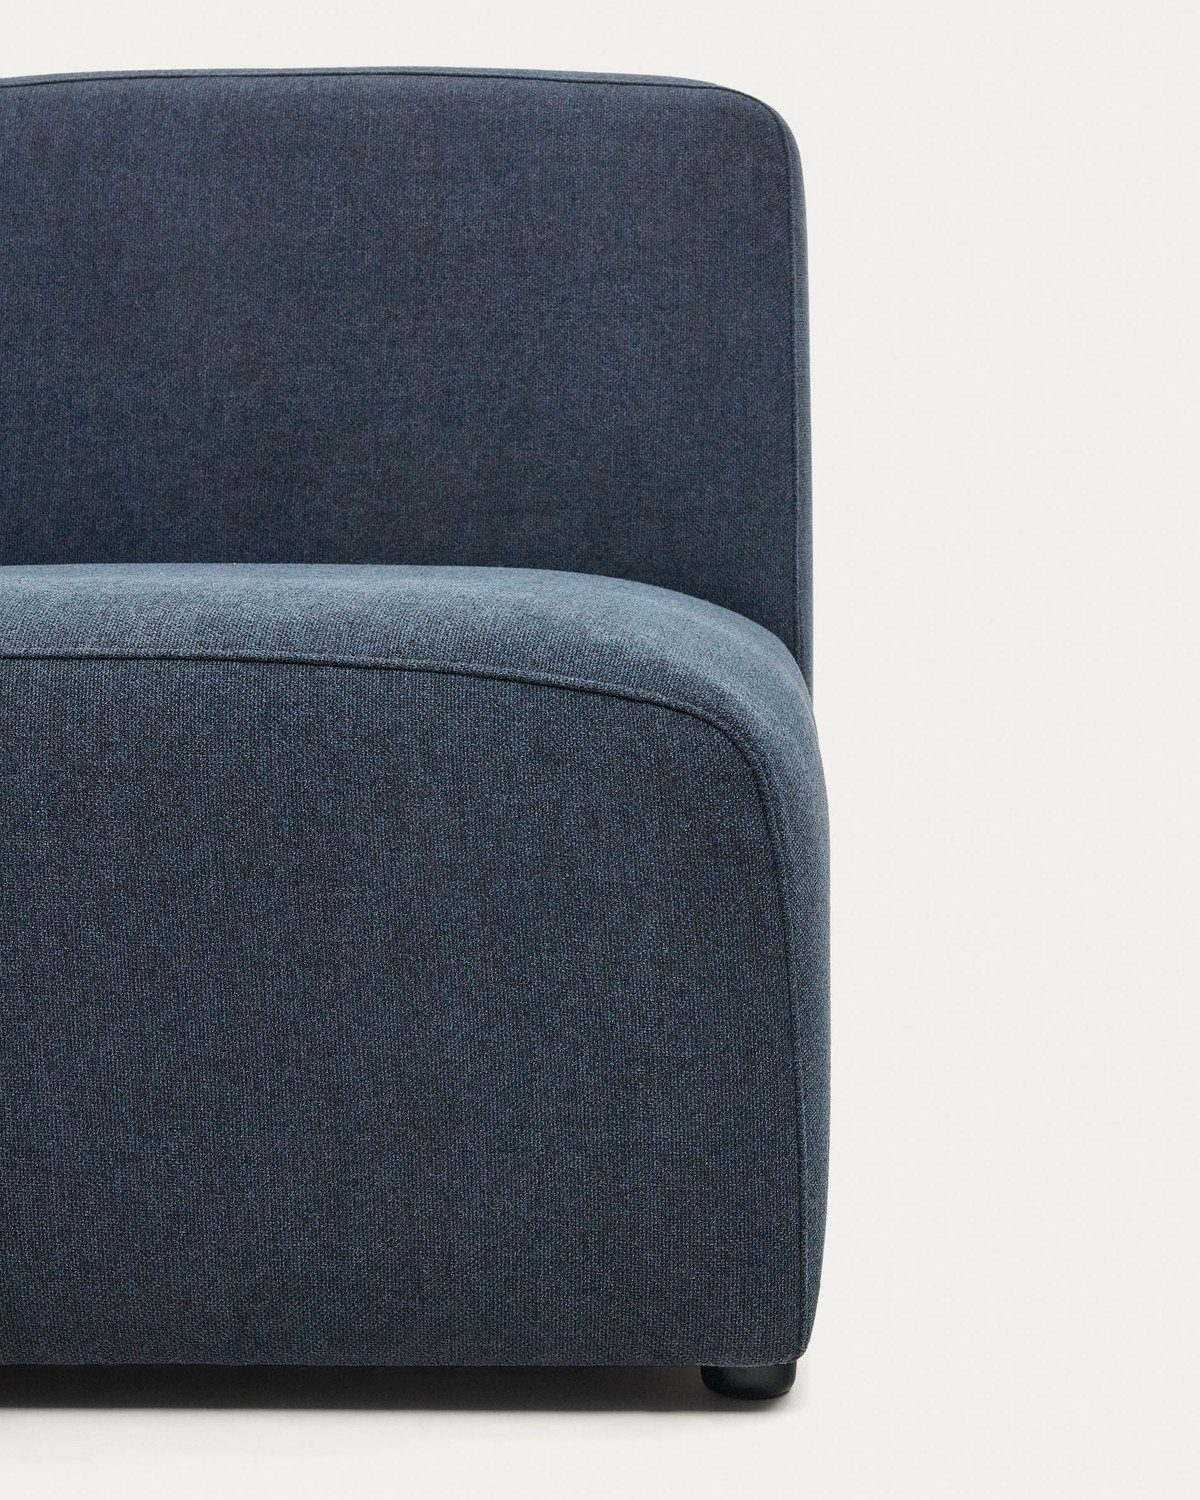 Modul Sofa 150x x cm 2-Sitzer-Modul Neom Sitzgelegenheit Neu Natur24 78 89 Blau